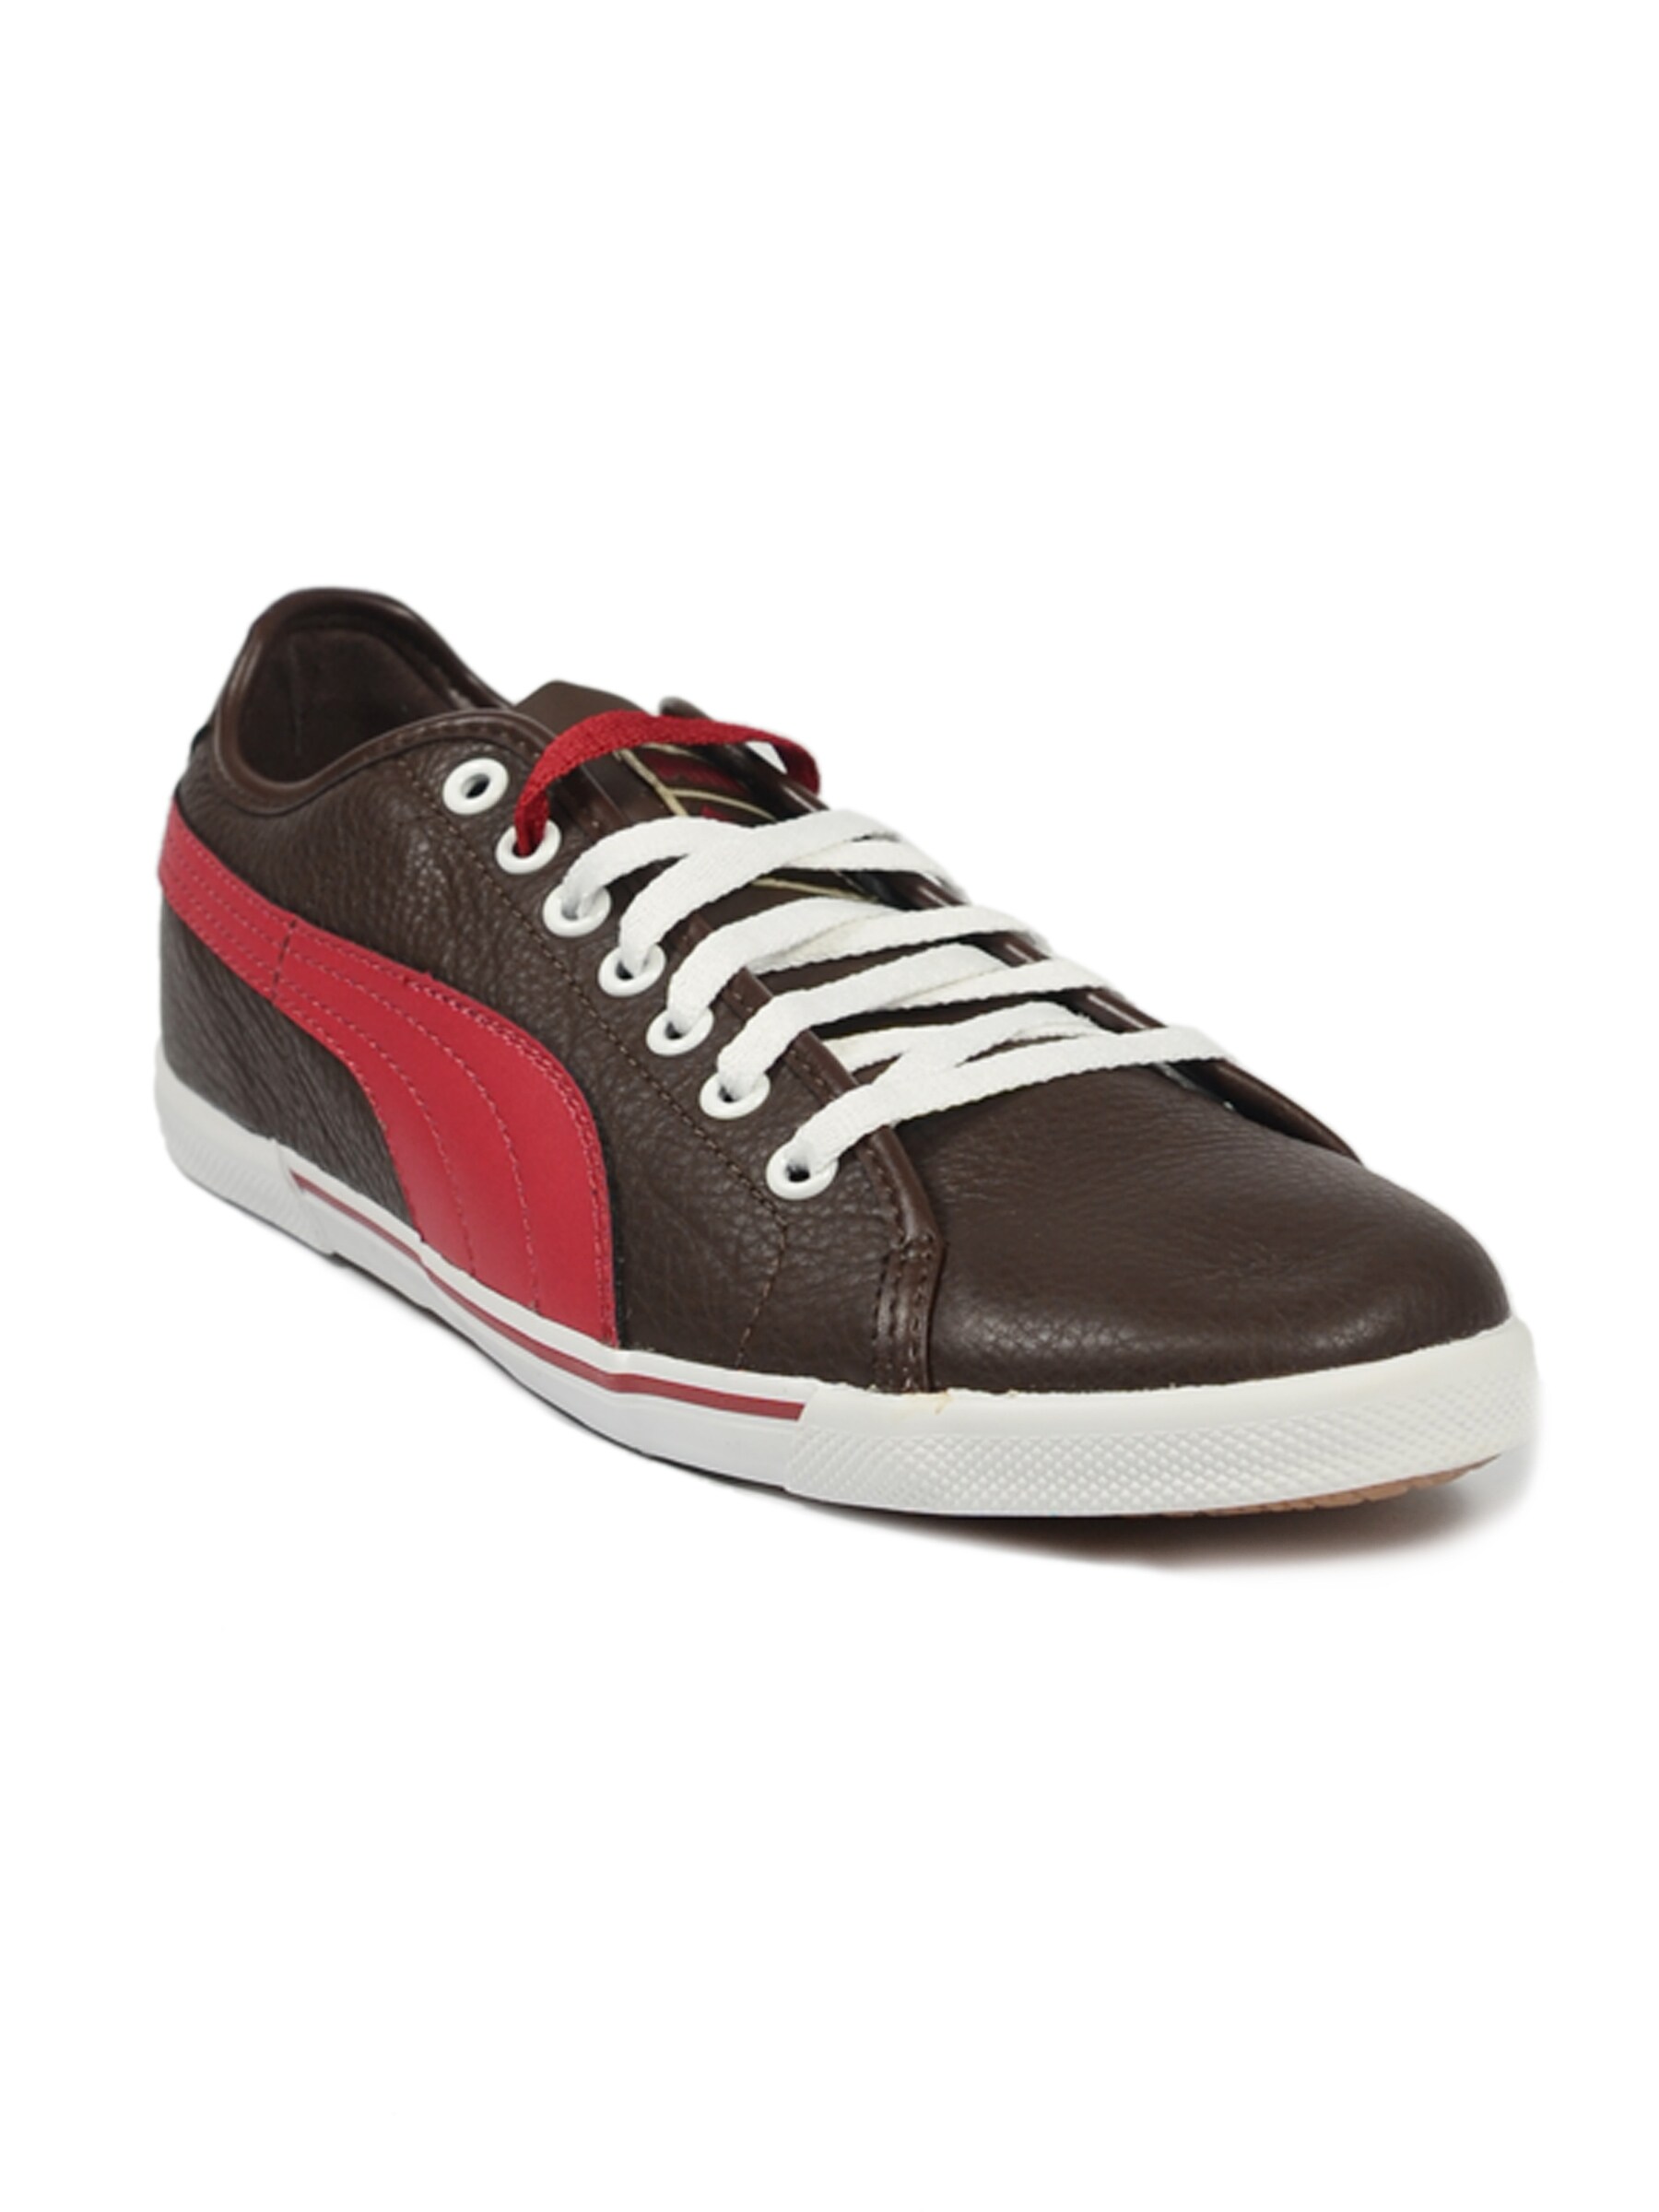 Puma Men's Benecio Leather Brown Red Shoe